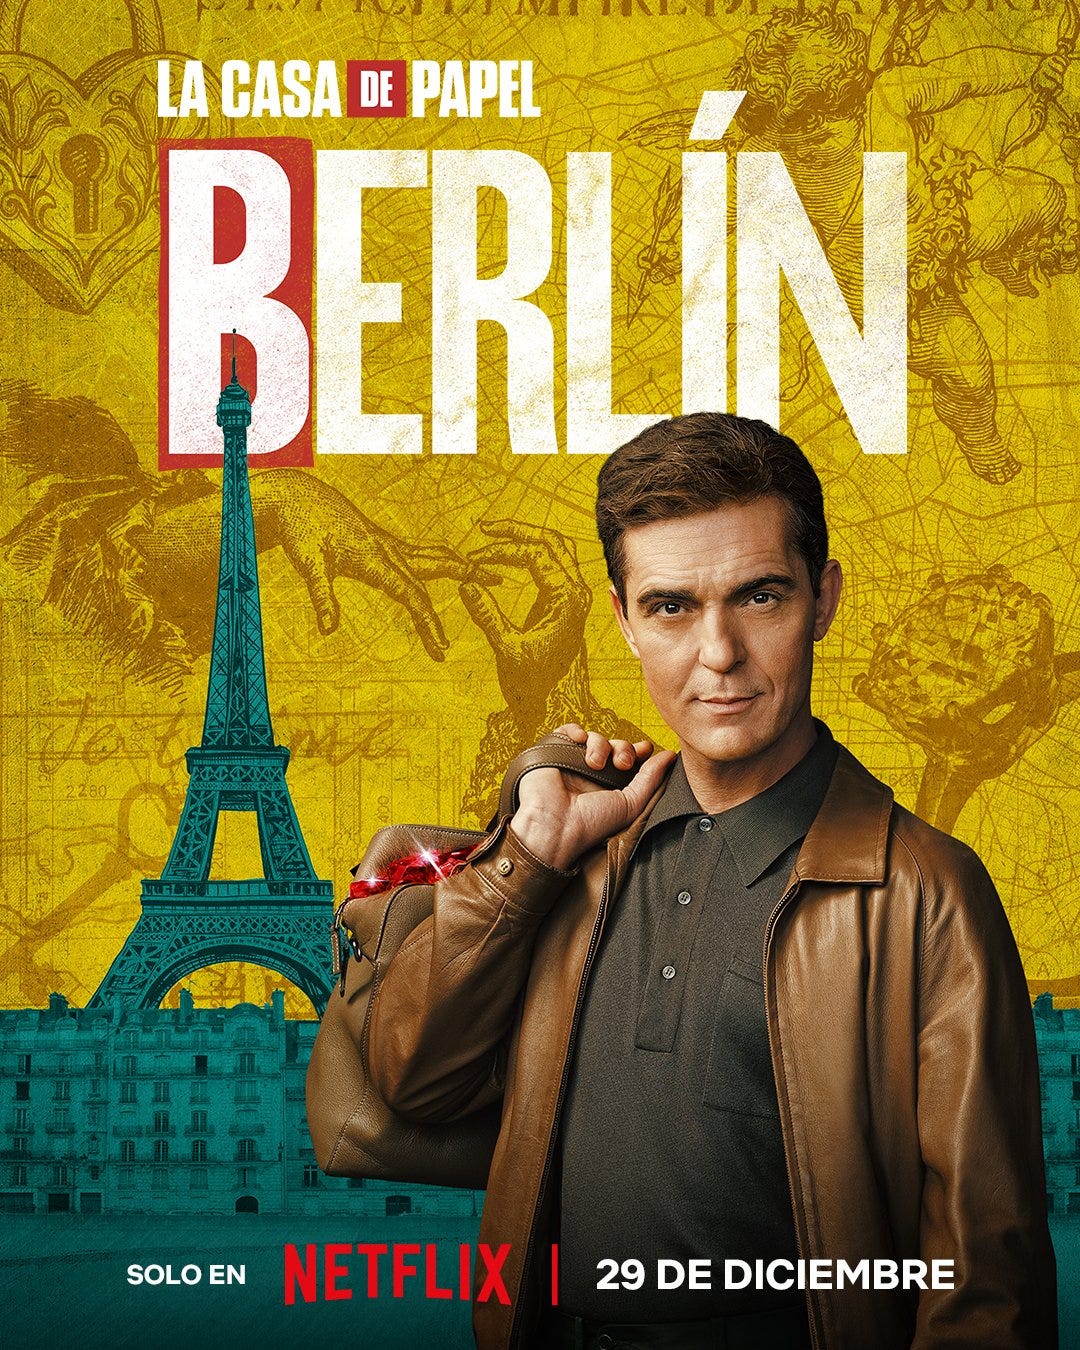 La casa de papel - BERLÍN on X: "Si Berlín es el corazón, Damián es el  cerebro de este atraco. #BERLÍNnetflix, del universo de La casa de papel,  llega a Netflix el